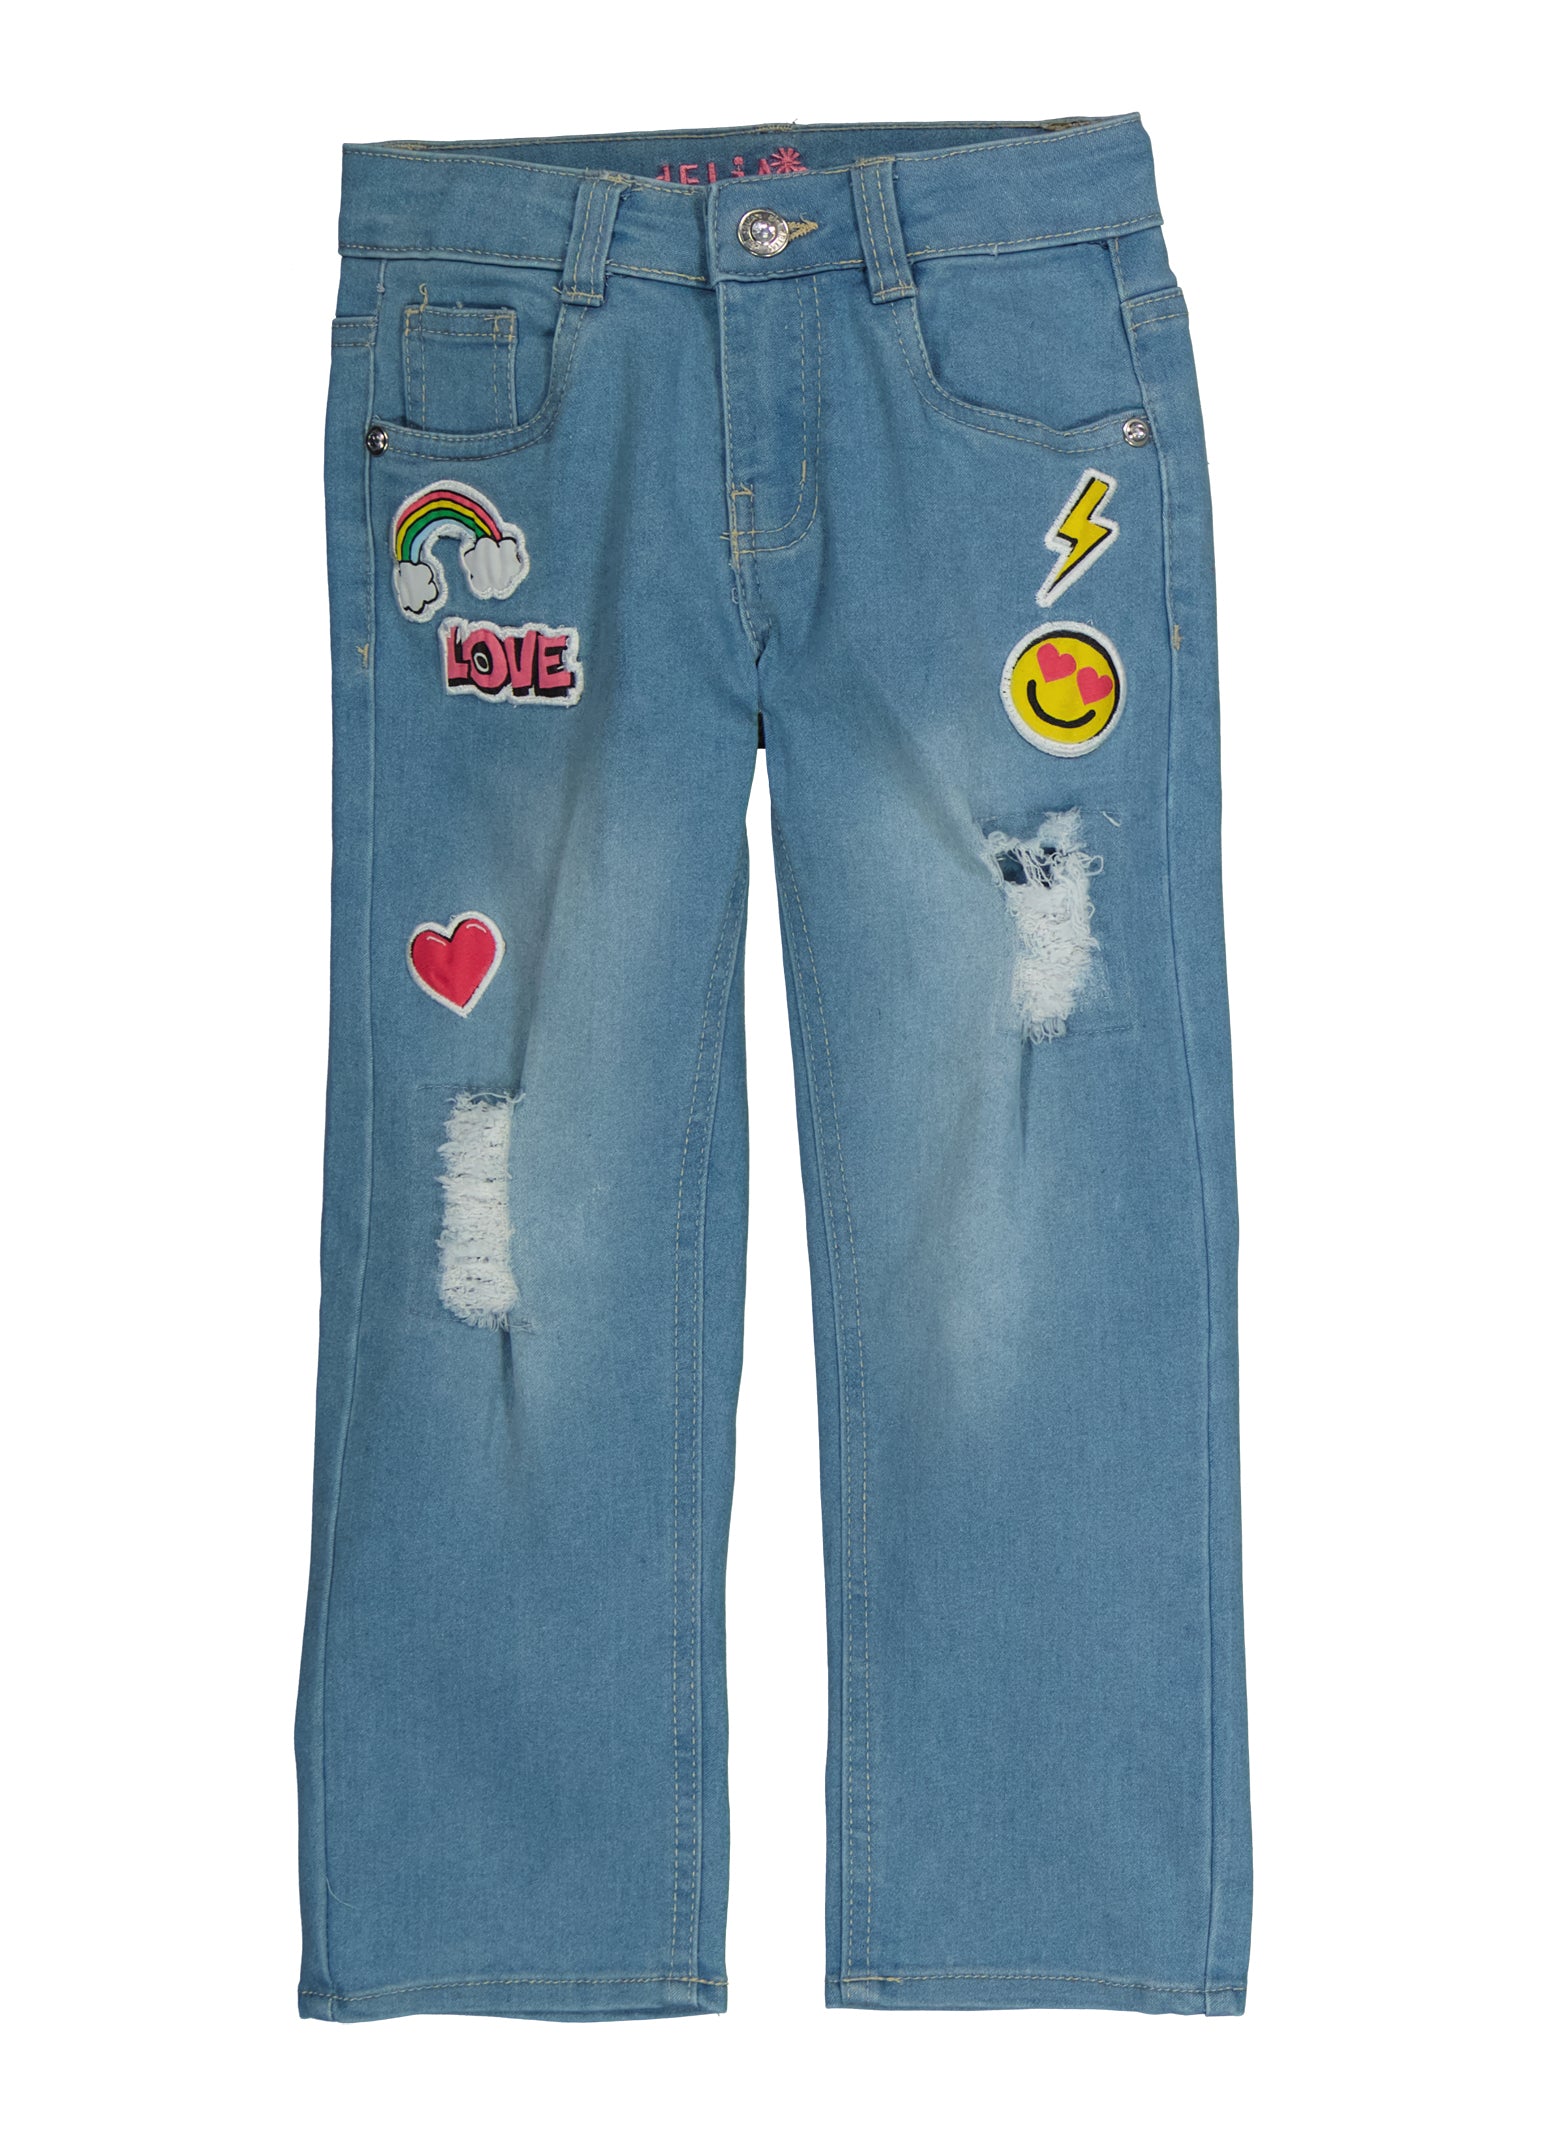 RARE Serenede Men's Light Denim Distressed Patch Patchwork Jeans Size 32 |  eBay